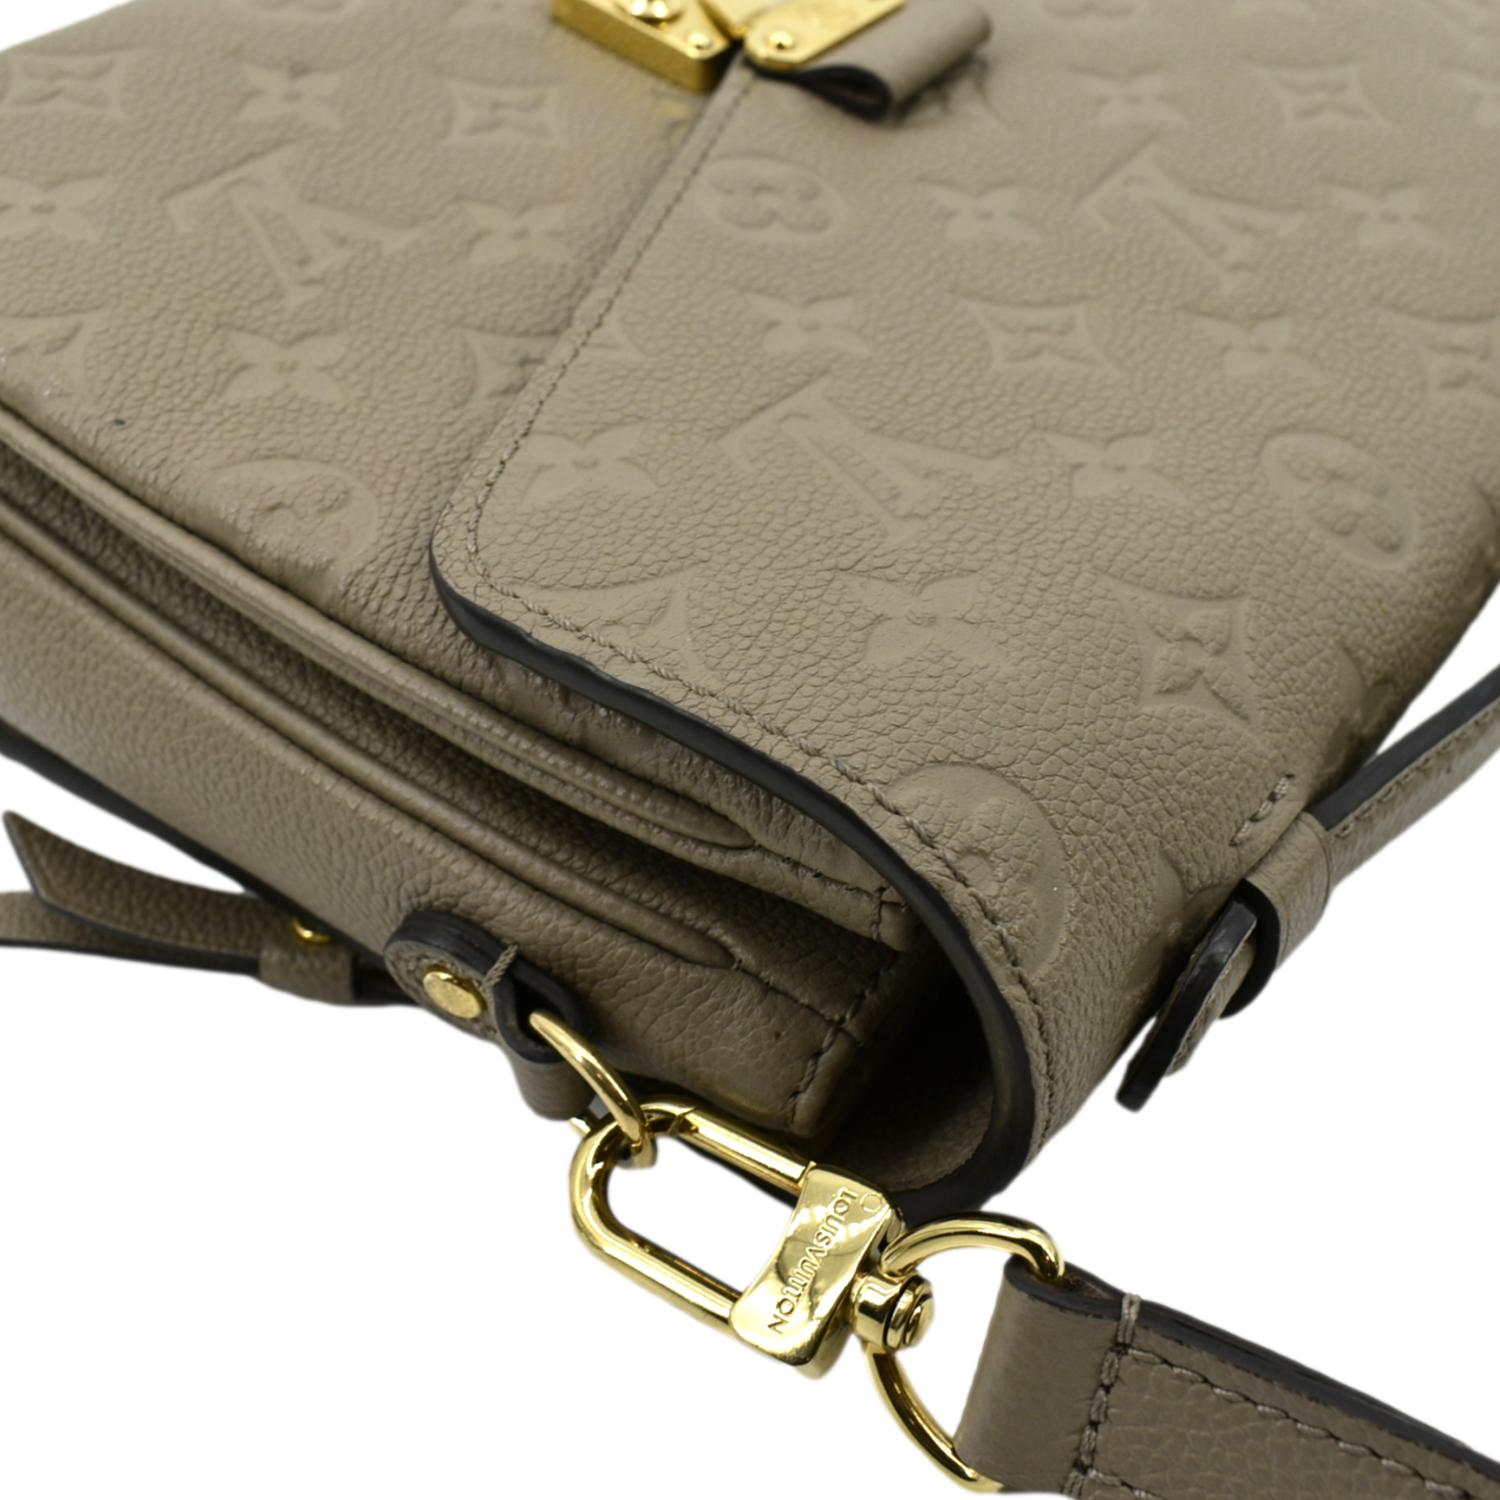 Pochette Métis - Luxury Shoulder Bags and Cross-Body Bags - Handbags, Women M41487